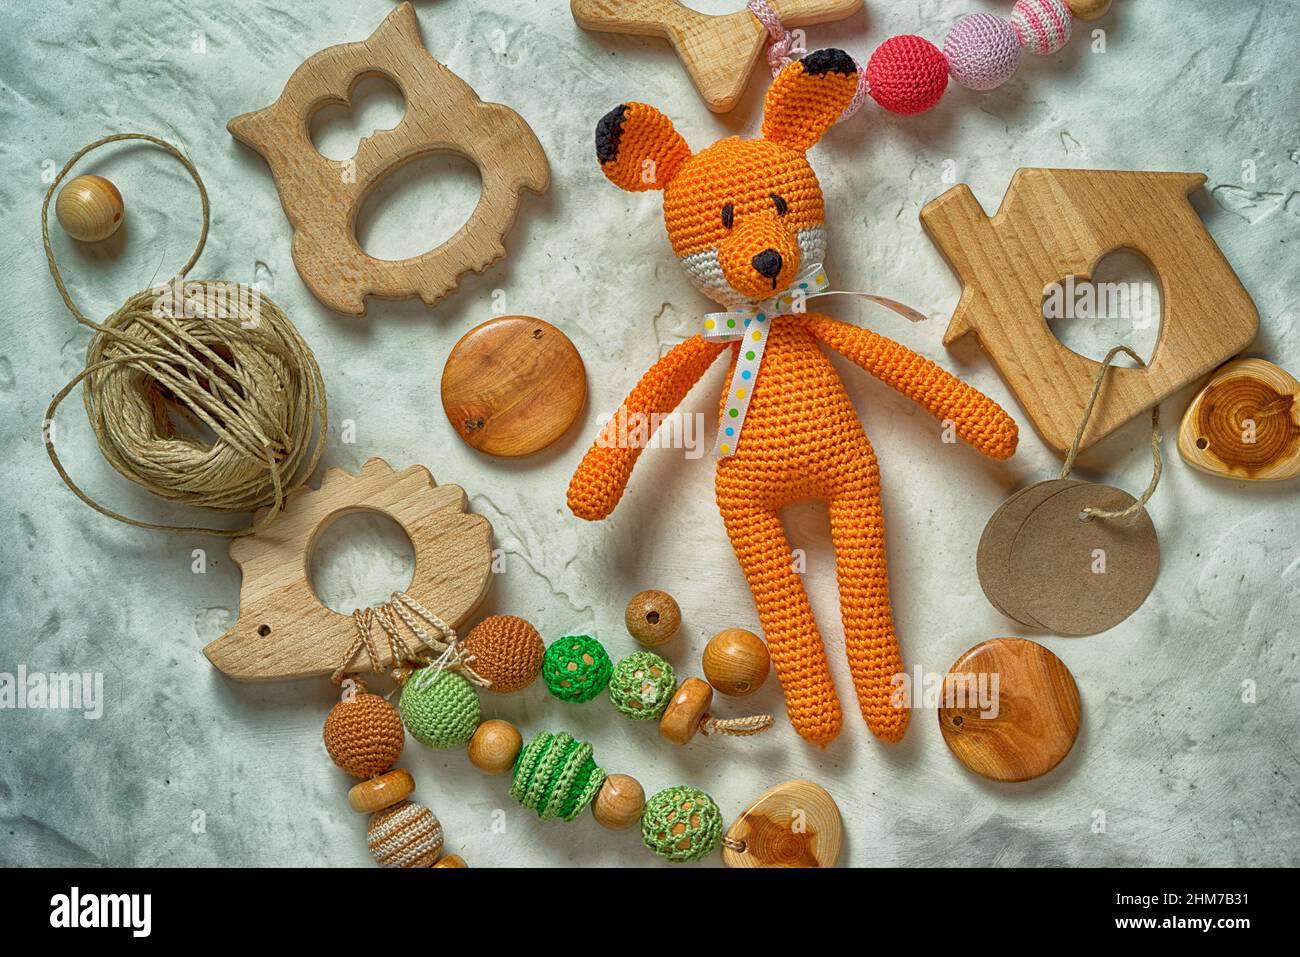 tas de renard amigurumi et de jouets en bois Banque D'Images